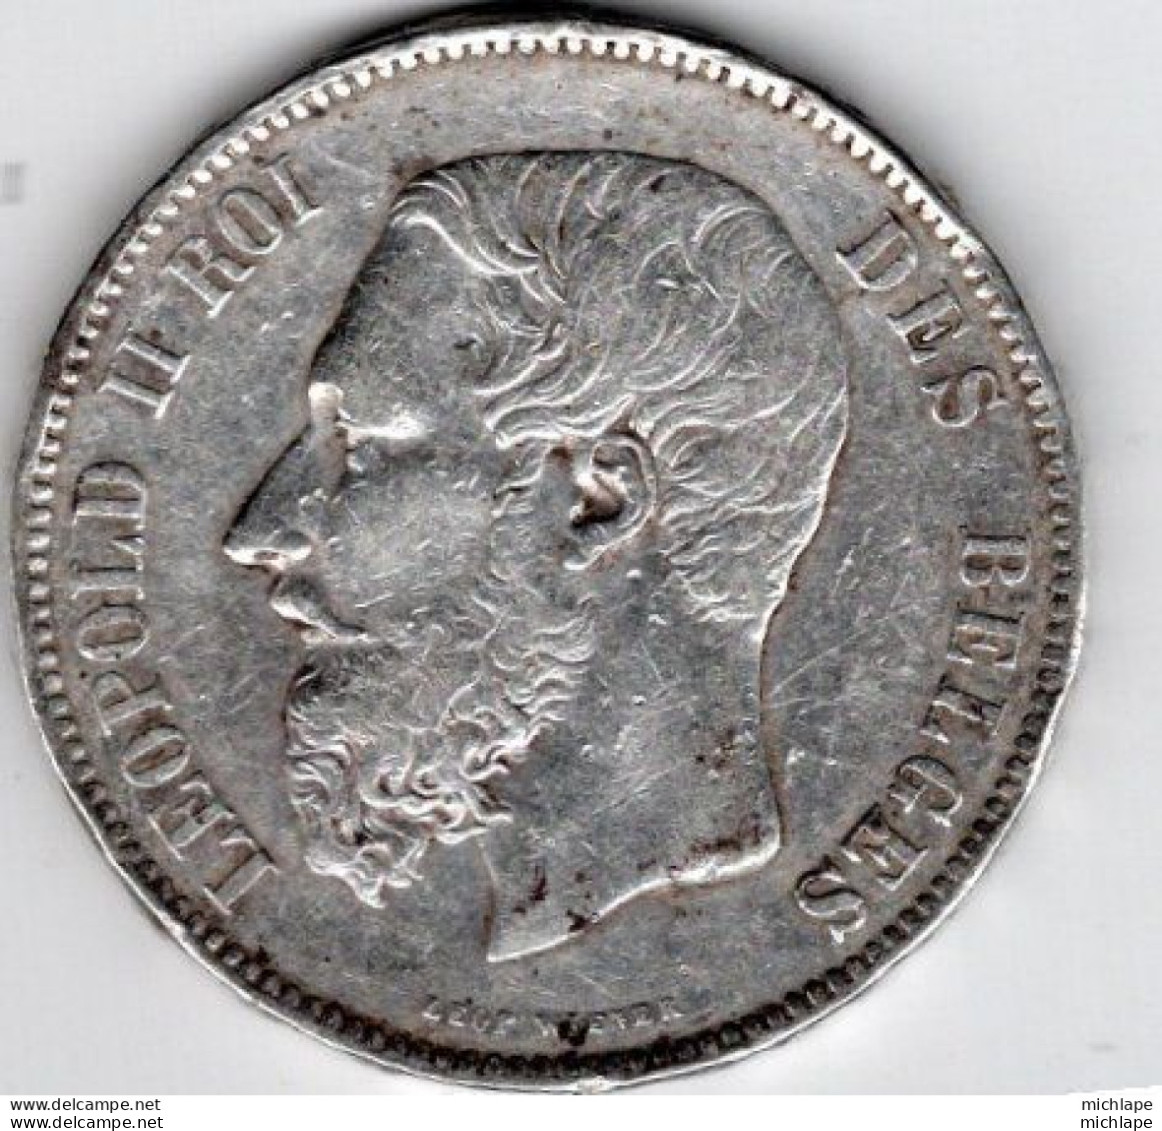 5 Francs ARGENT - LEOPOLD II - 1873 - 5 Francs